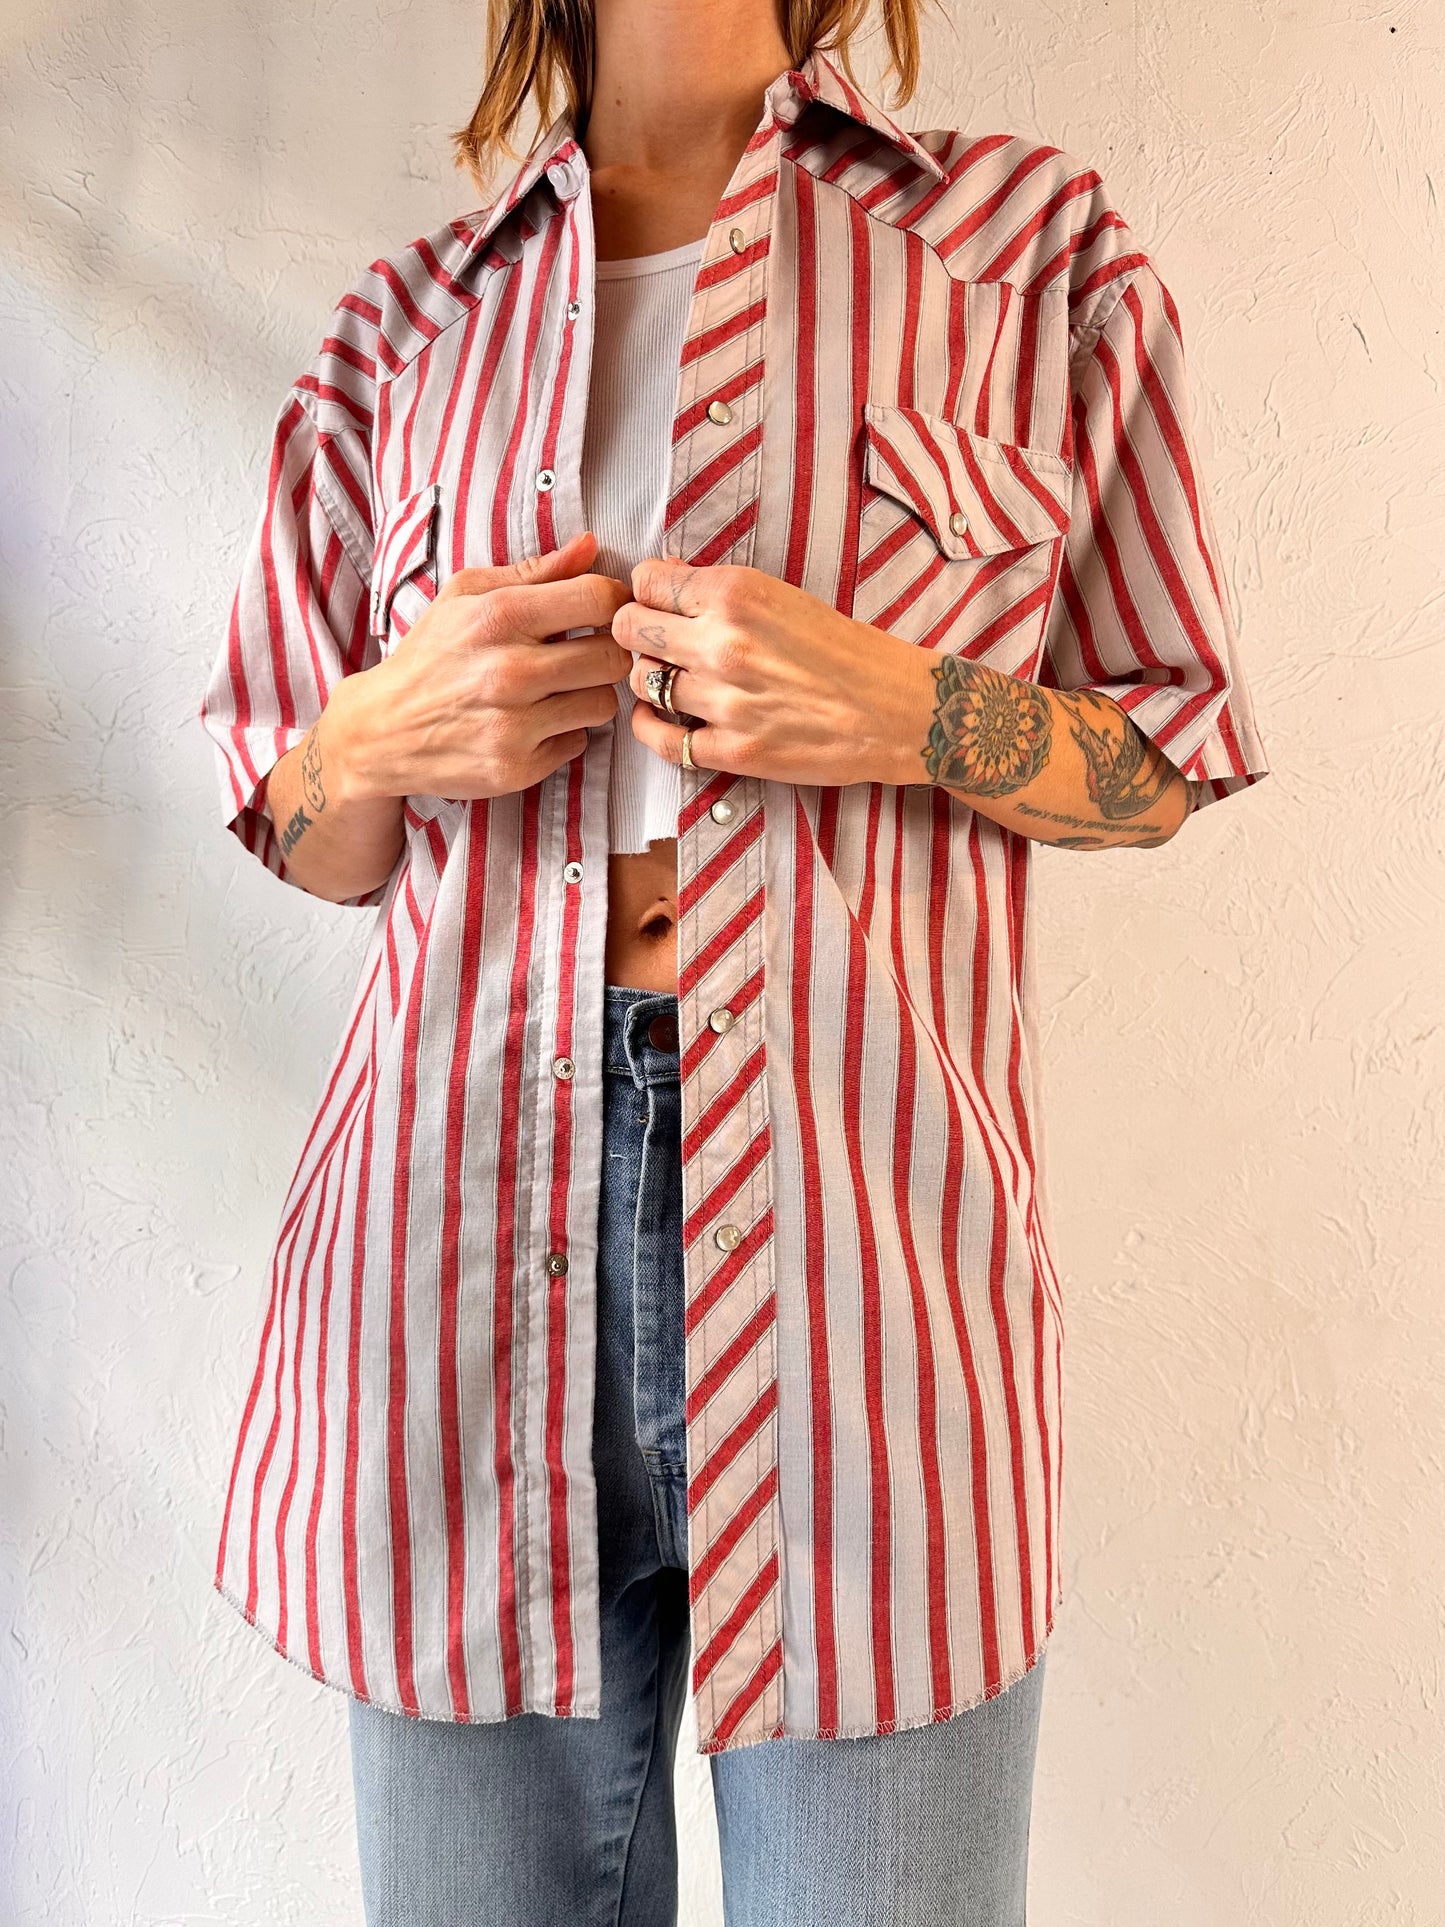 Y2k 'Wrangler' Red White Striped Short Sleeve Pearl Snap Shirt / Medium